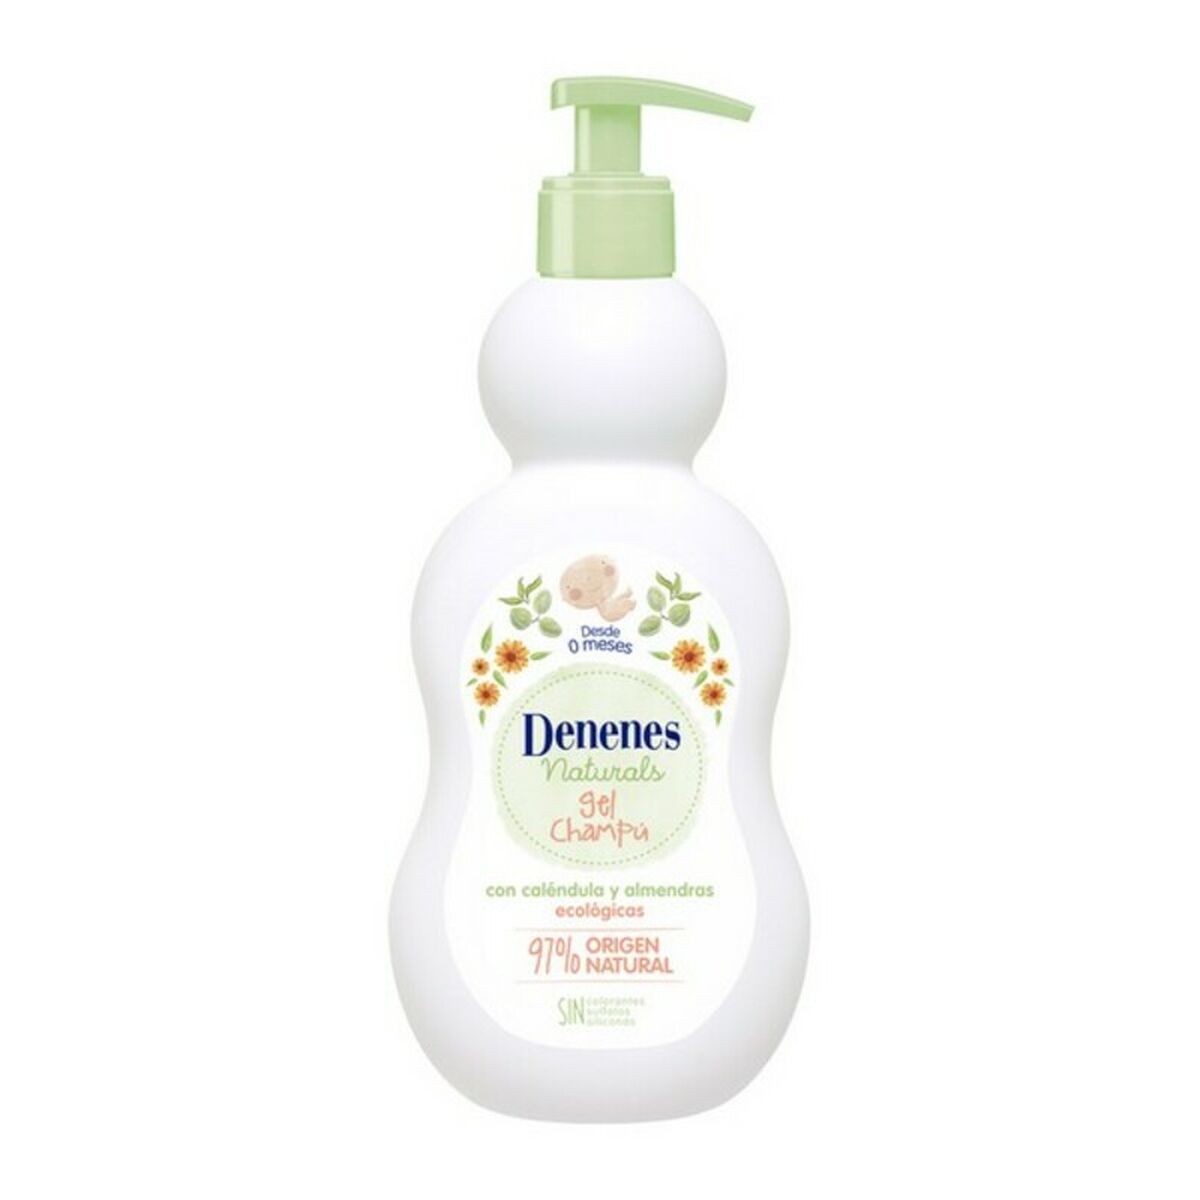 2-in-1 geeli ja shampoo Natural Denenes 200032 (400 ml) 400 ml